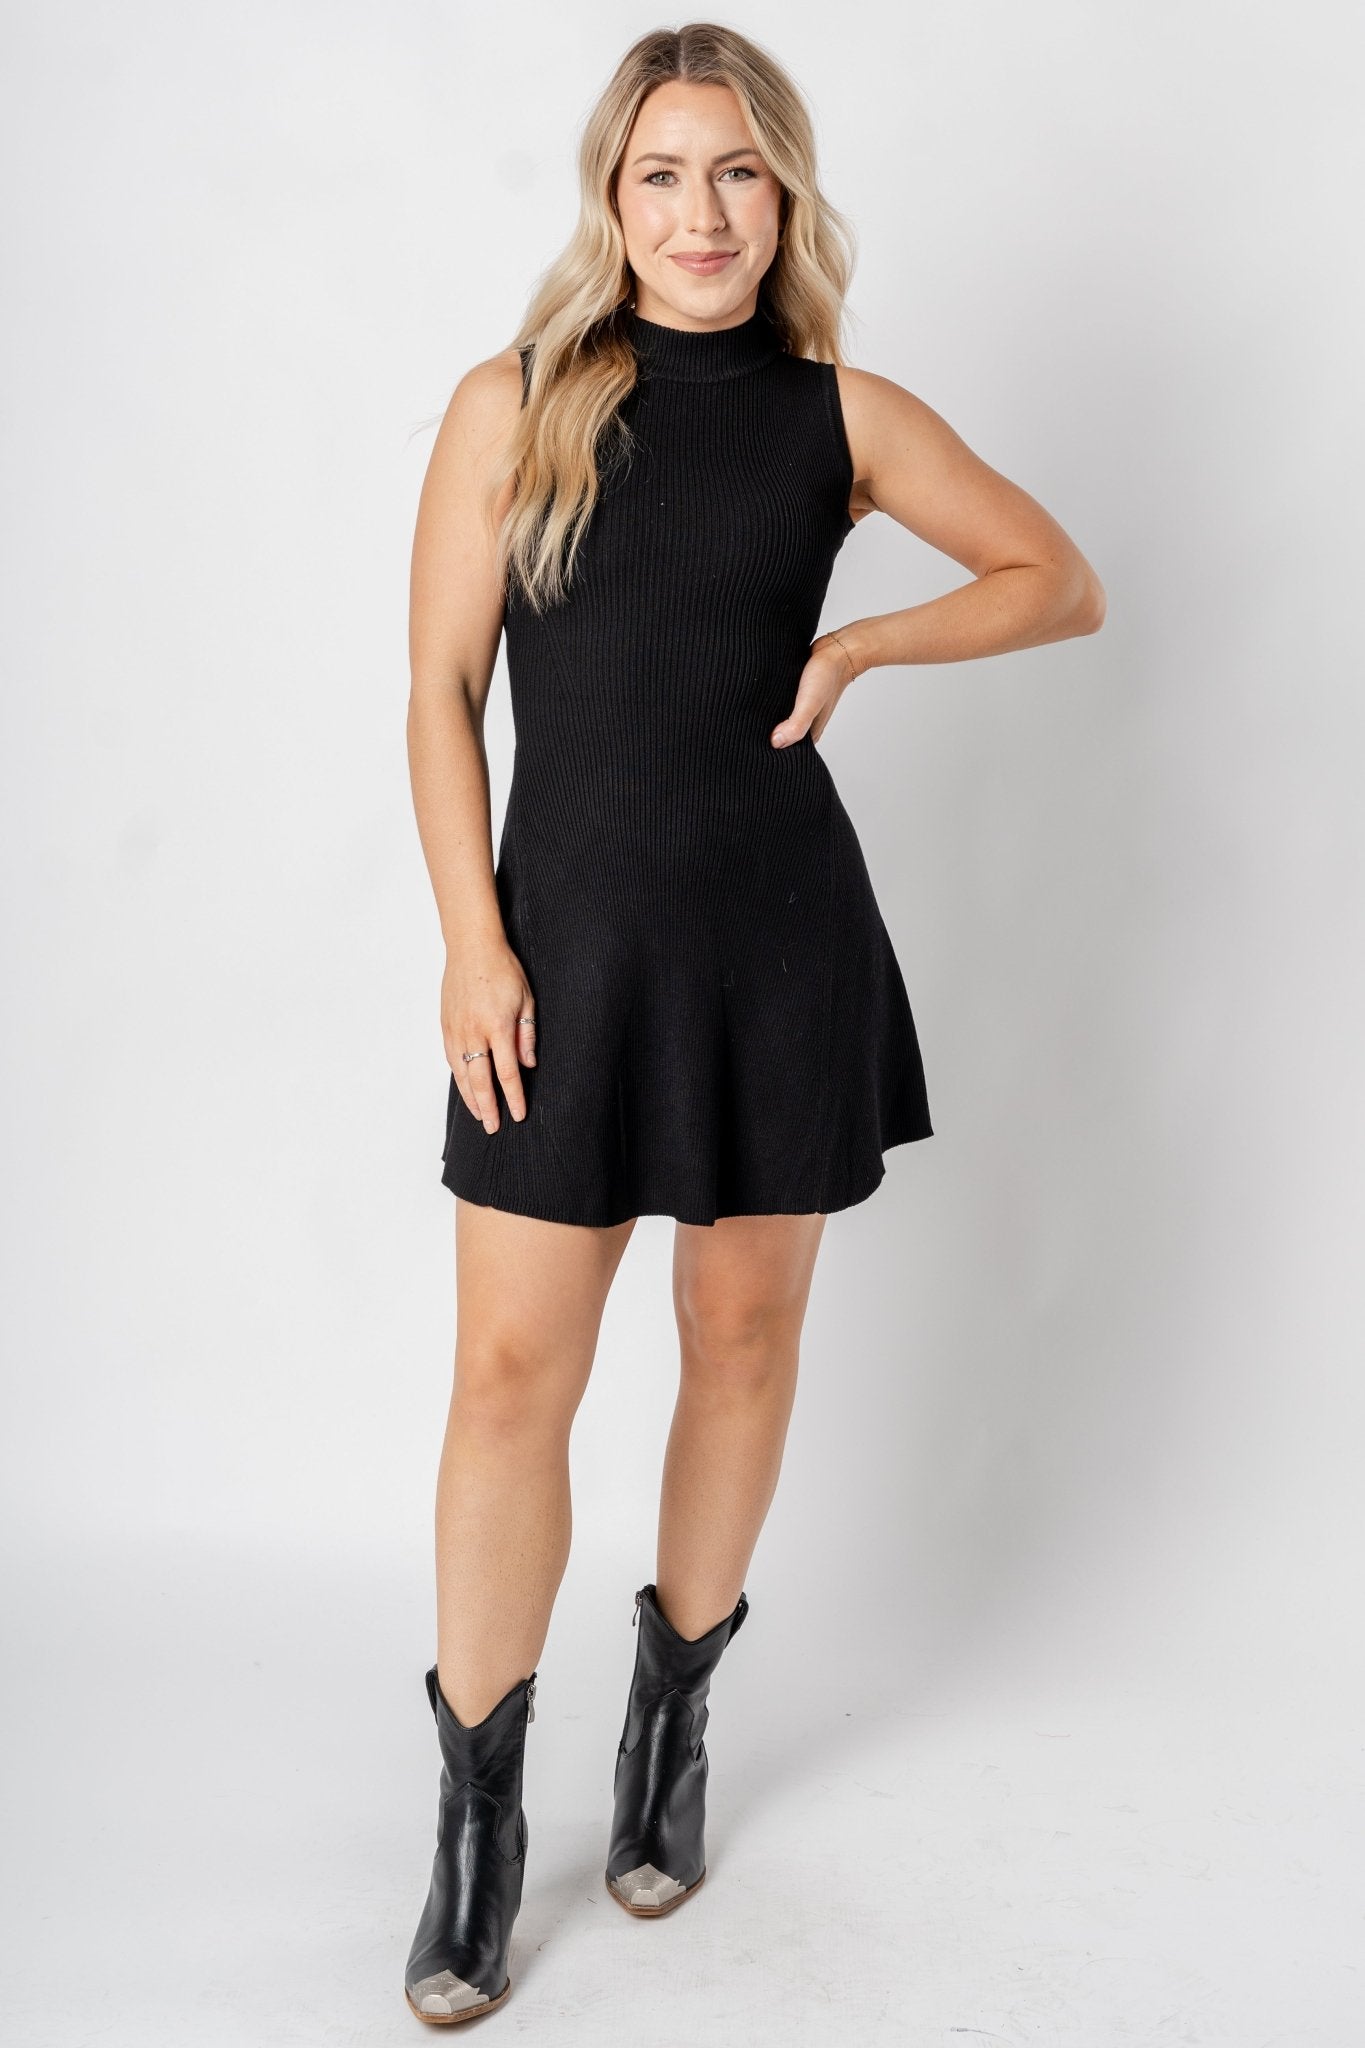 High neck flare mini dress black - Trendy dress - Fashion Dresses at Lush Fashion Lounge Boutique in Oklahoma City